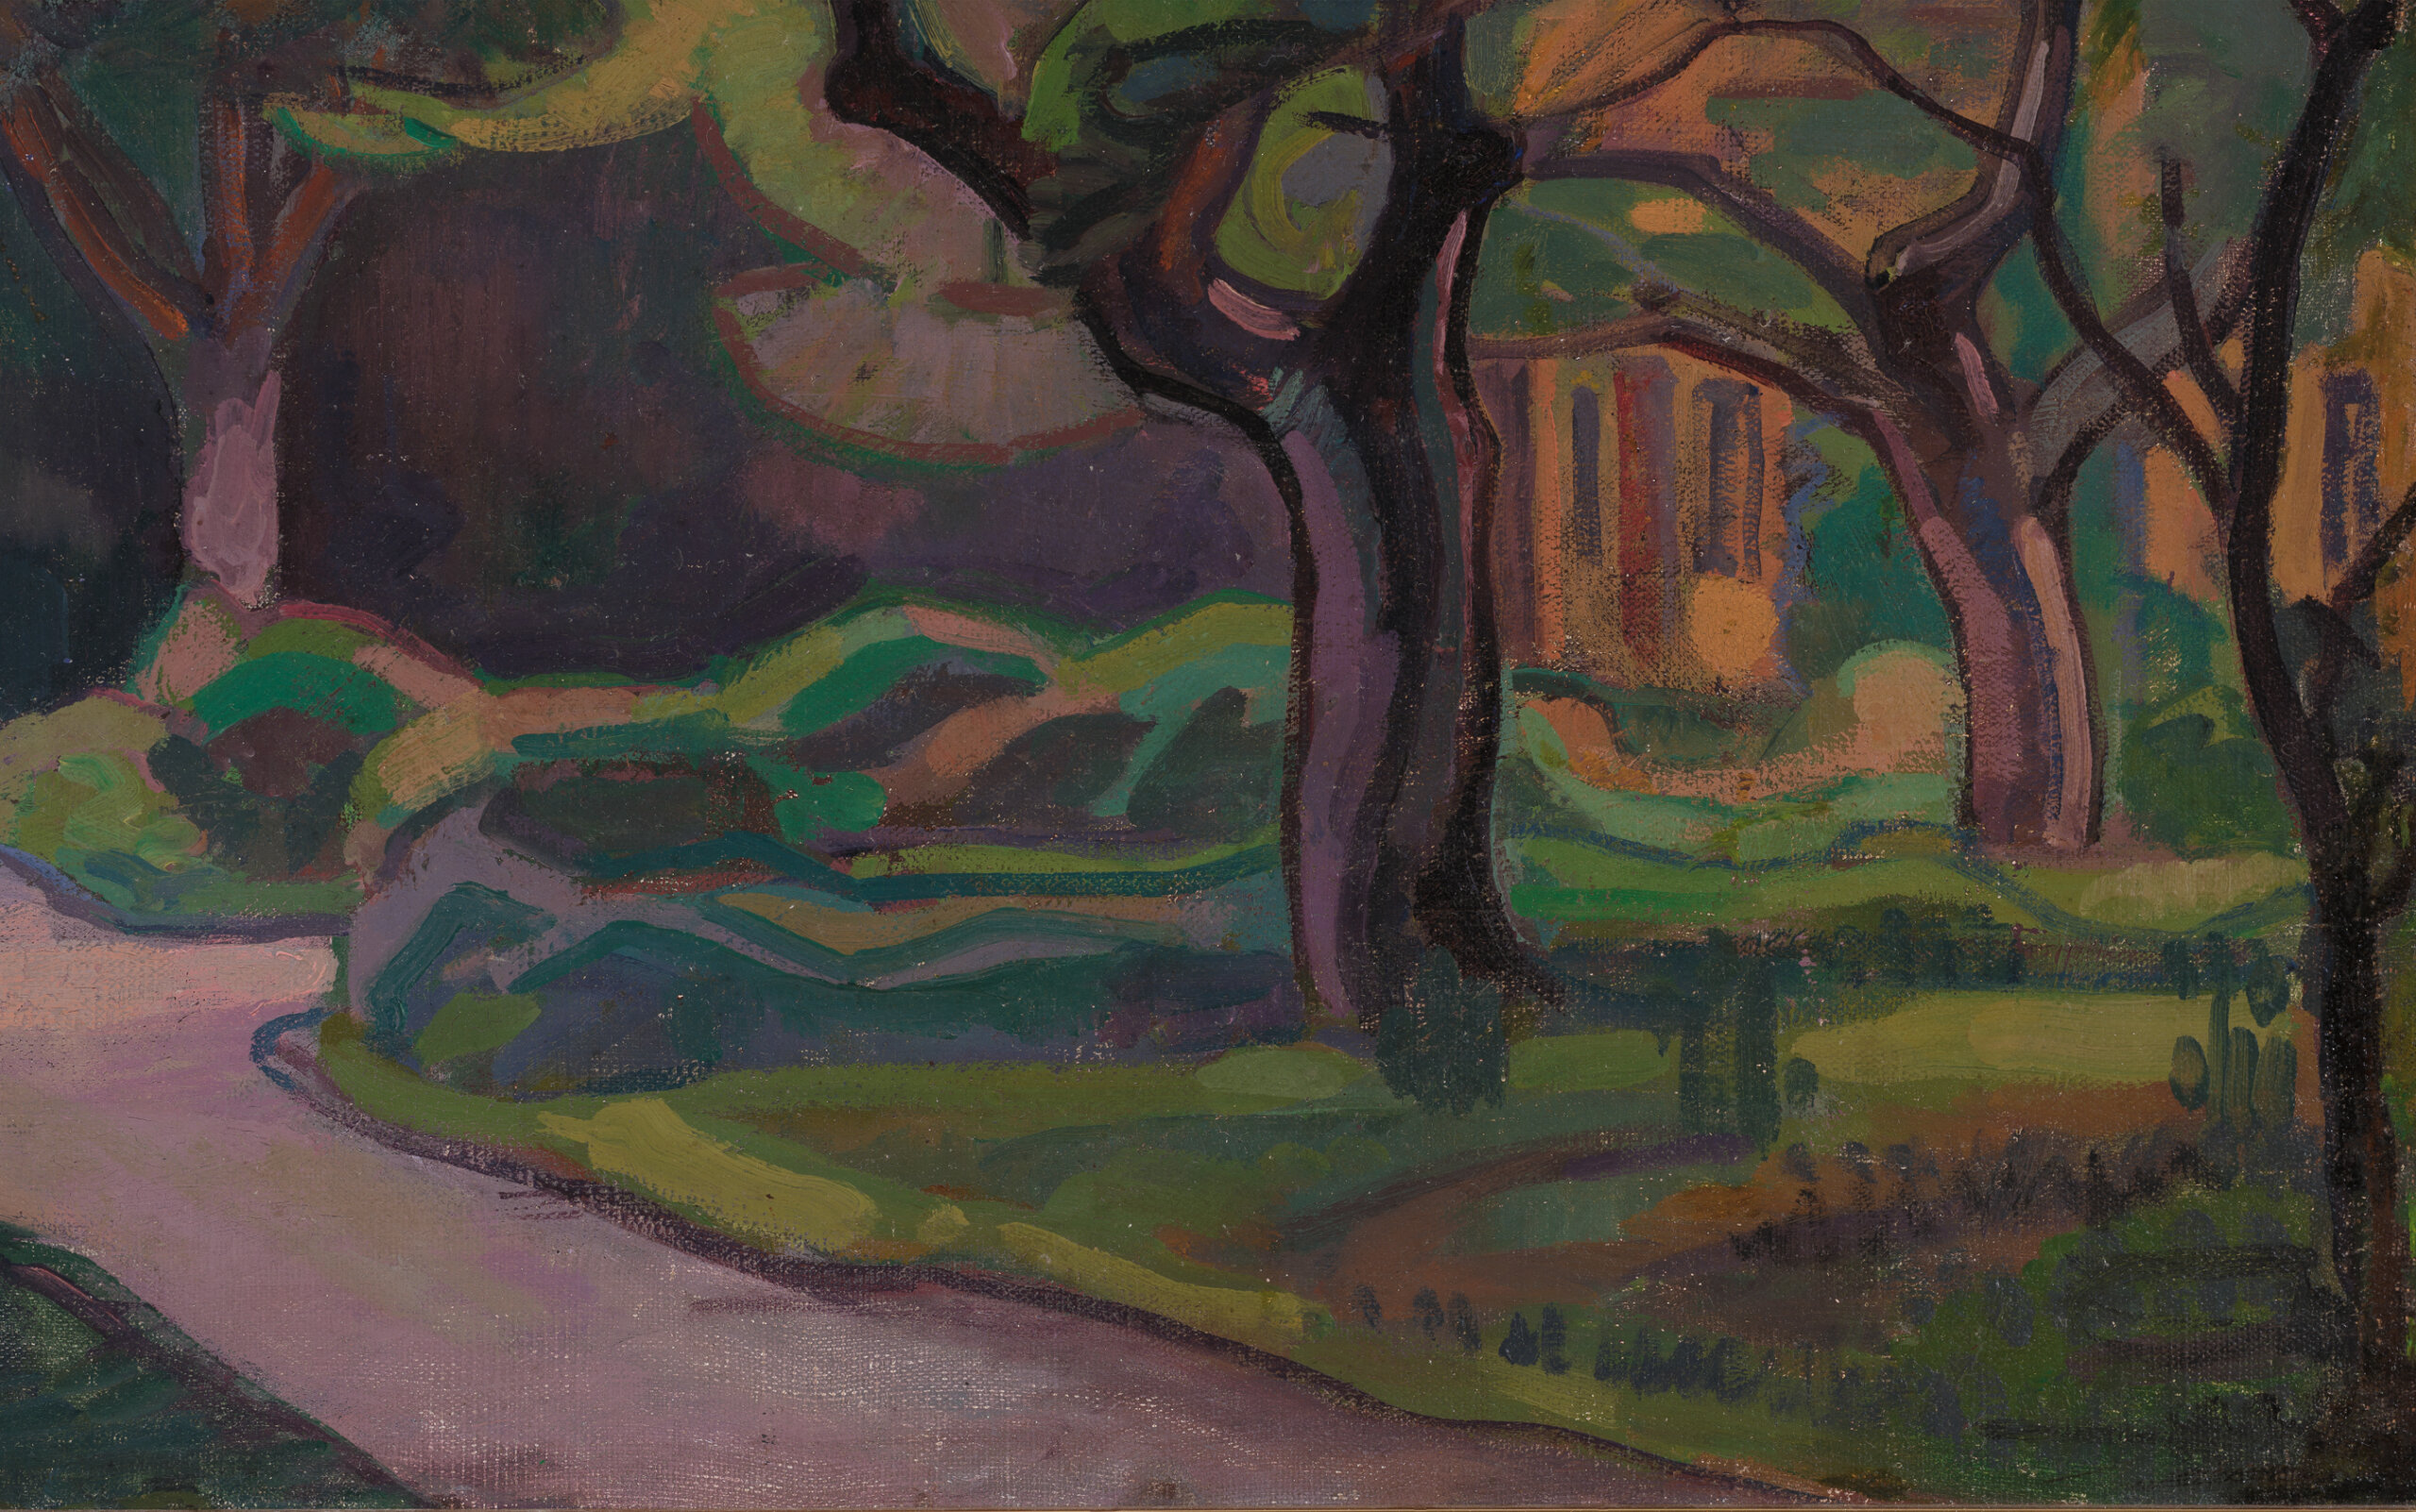 Nikolai Triik “Vana aed”, 1915. 63,3 x 81 cm.